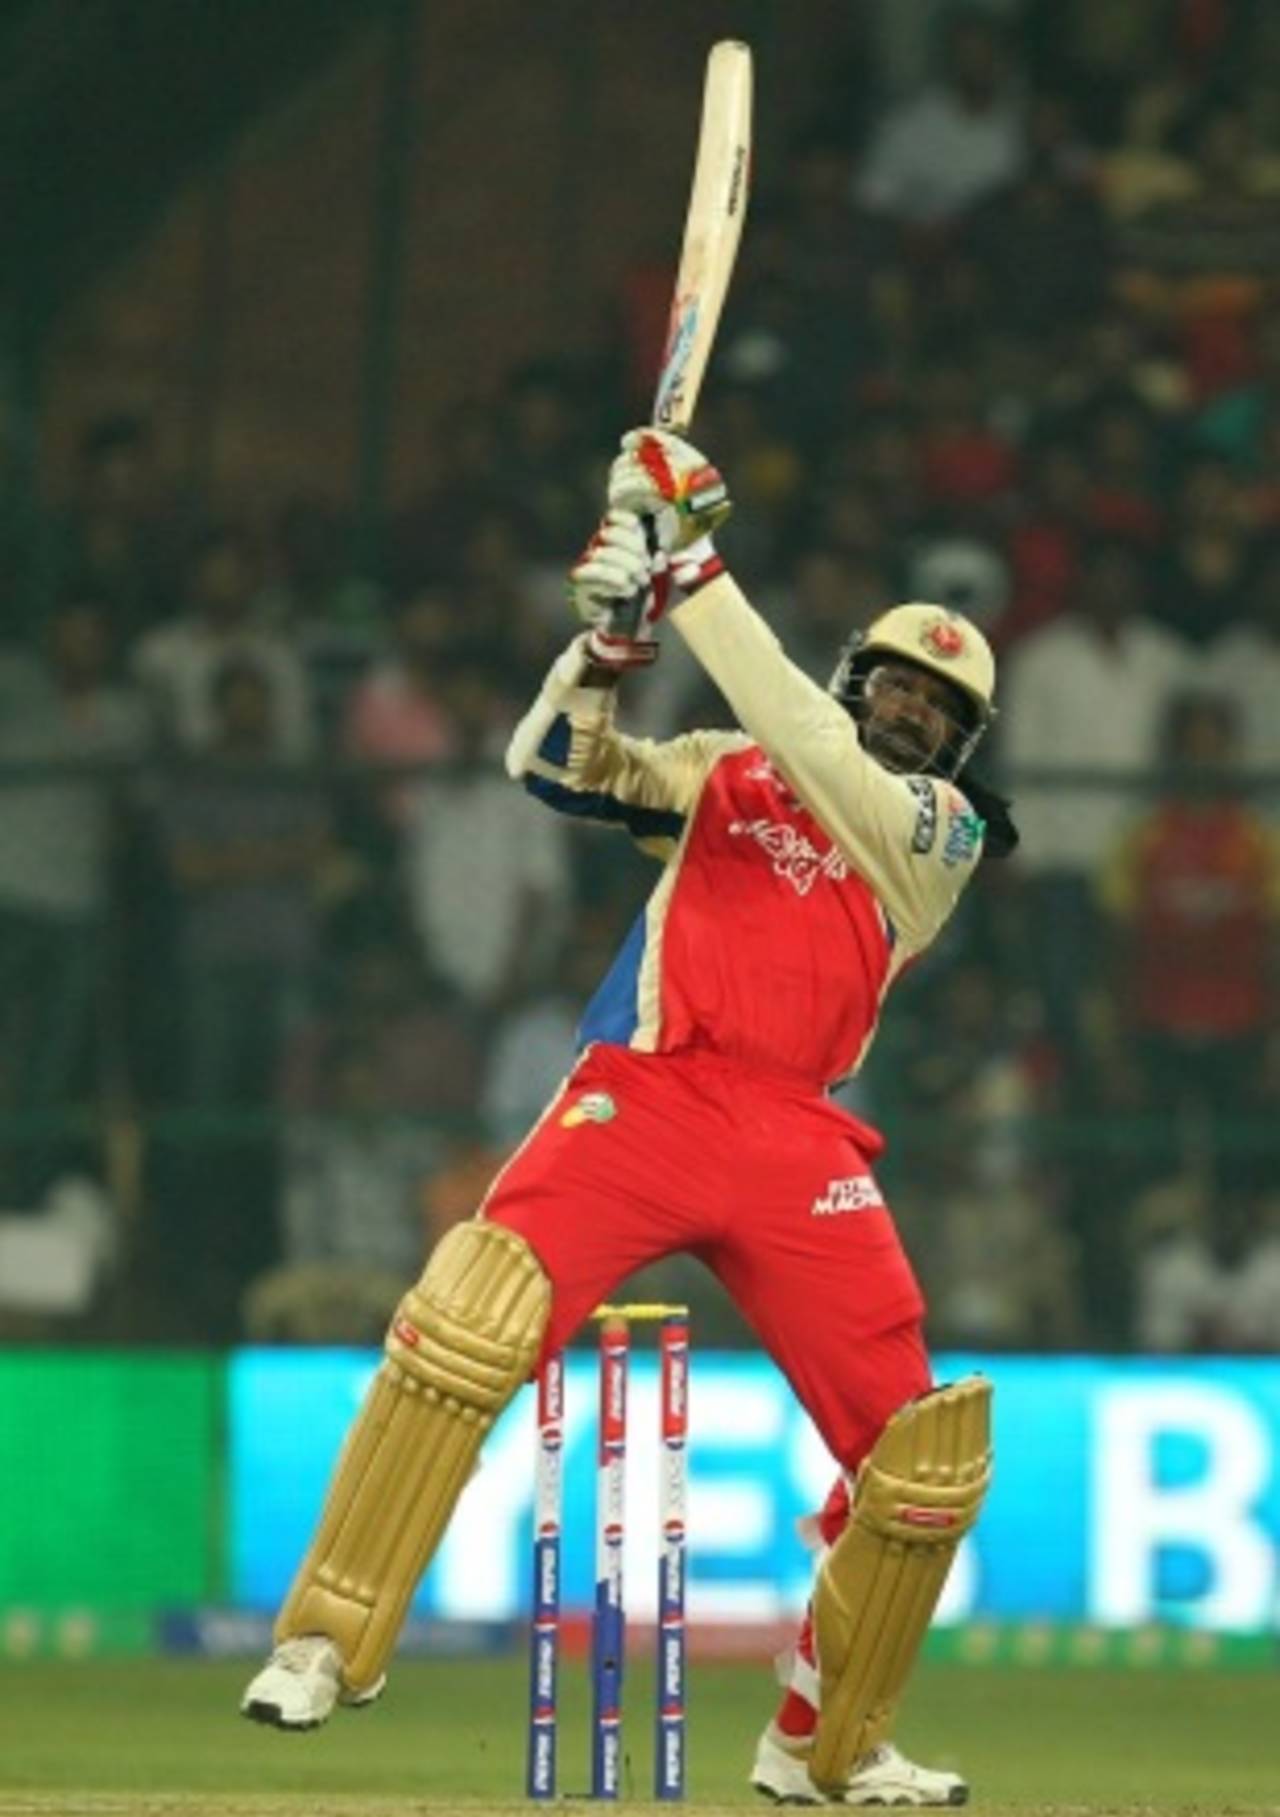 Chris Gayle launches one back over the bowler's head, Royal Challengers Bangalore v Mumbai Indians, IPL, Bangalore, April 4, 2013